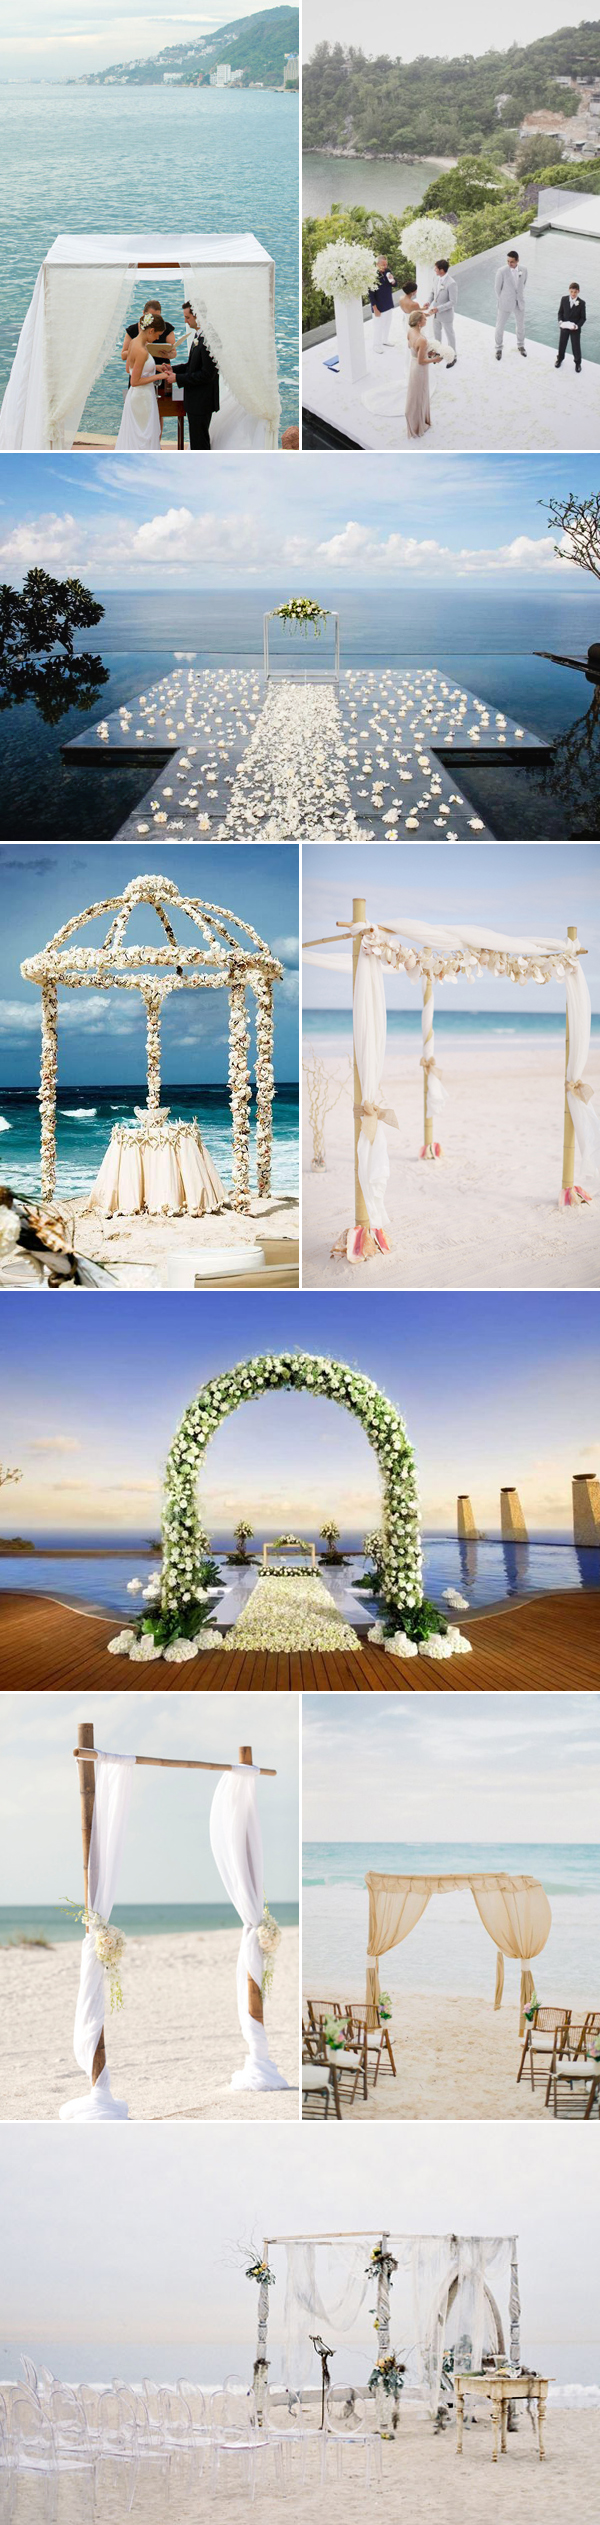 Beach & bay view wedding altars